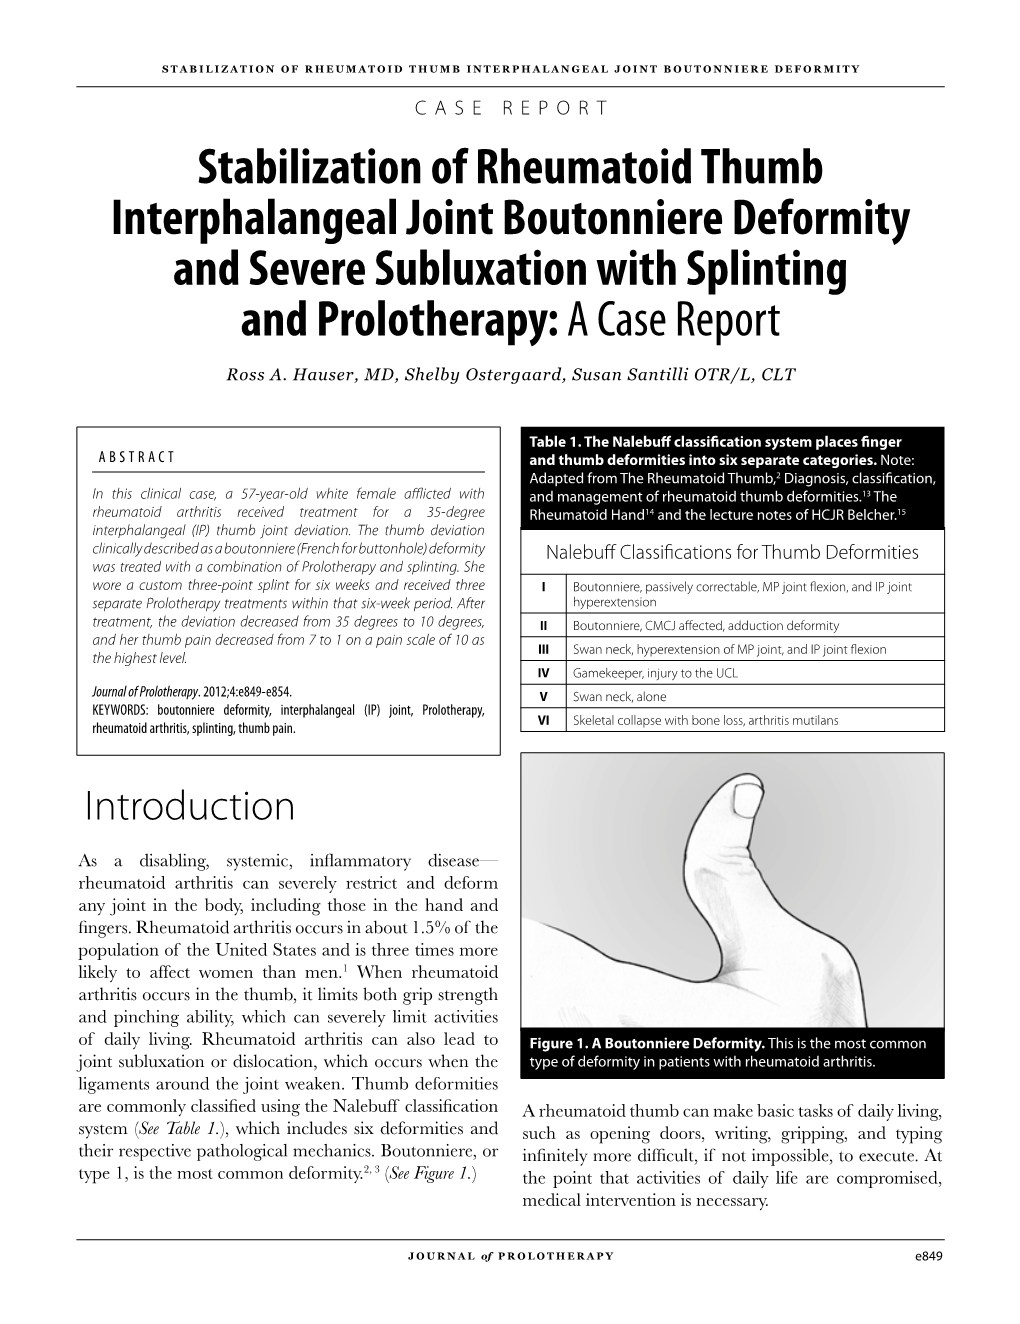 Stabilization of Rheumatoid Thumb Interphalangeal Joint Boutonniere Deformity